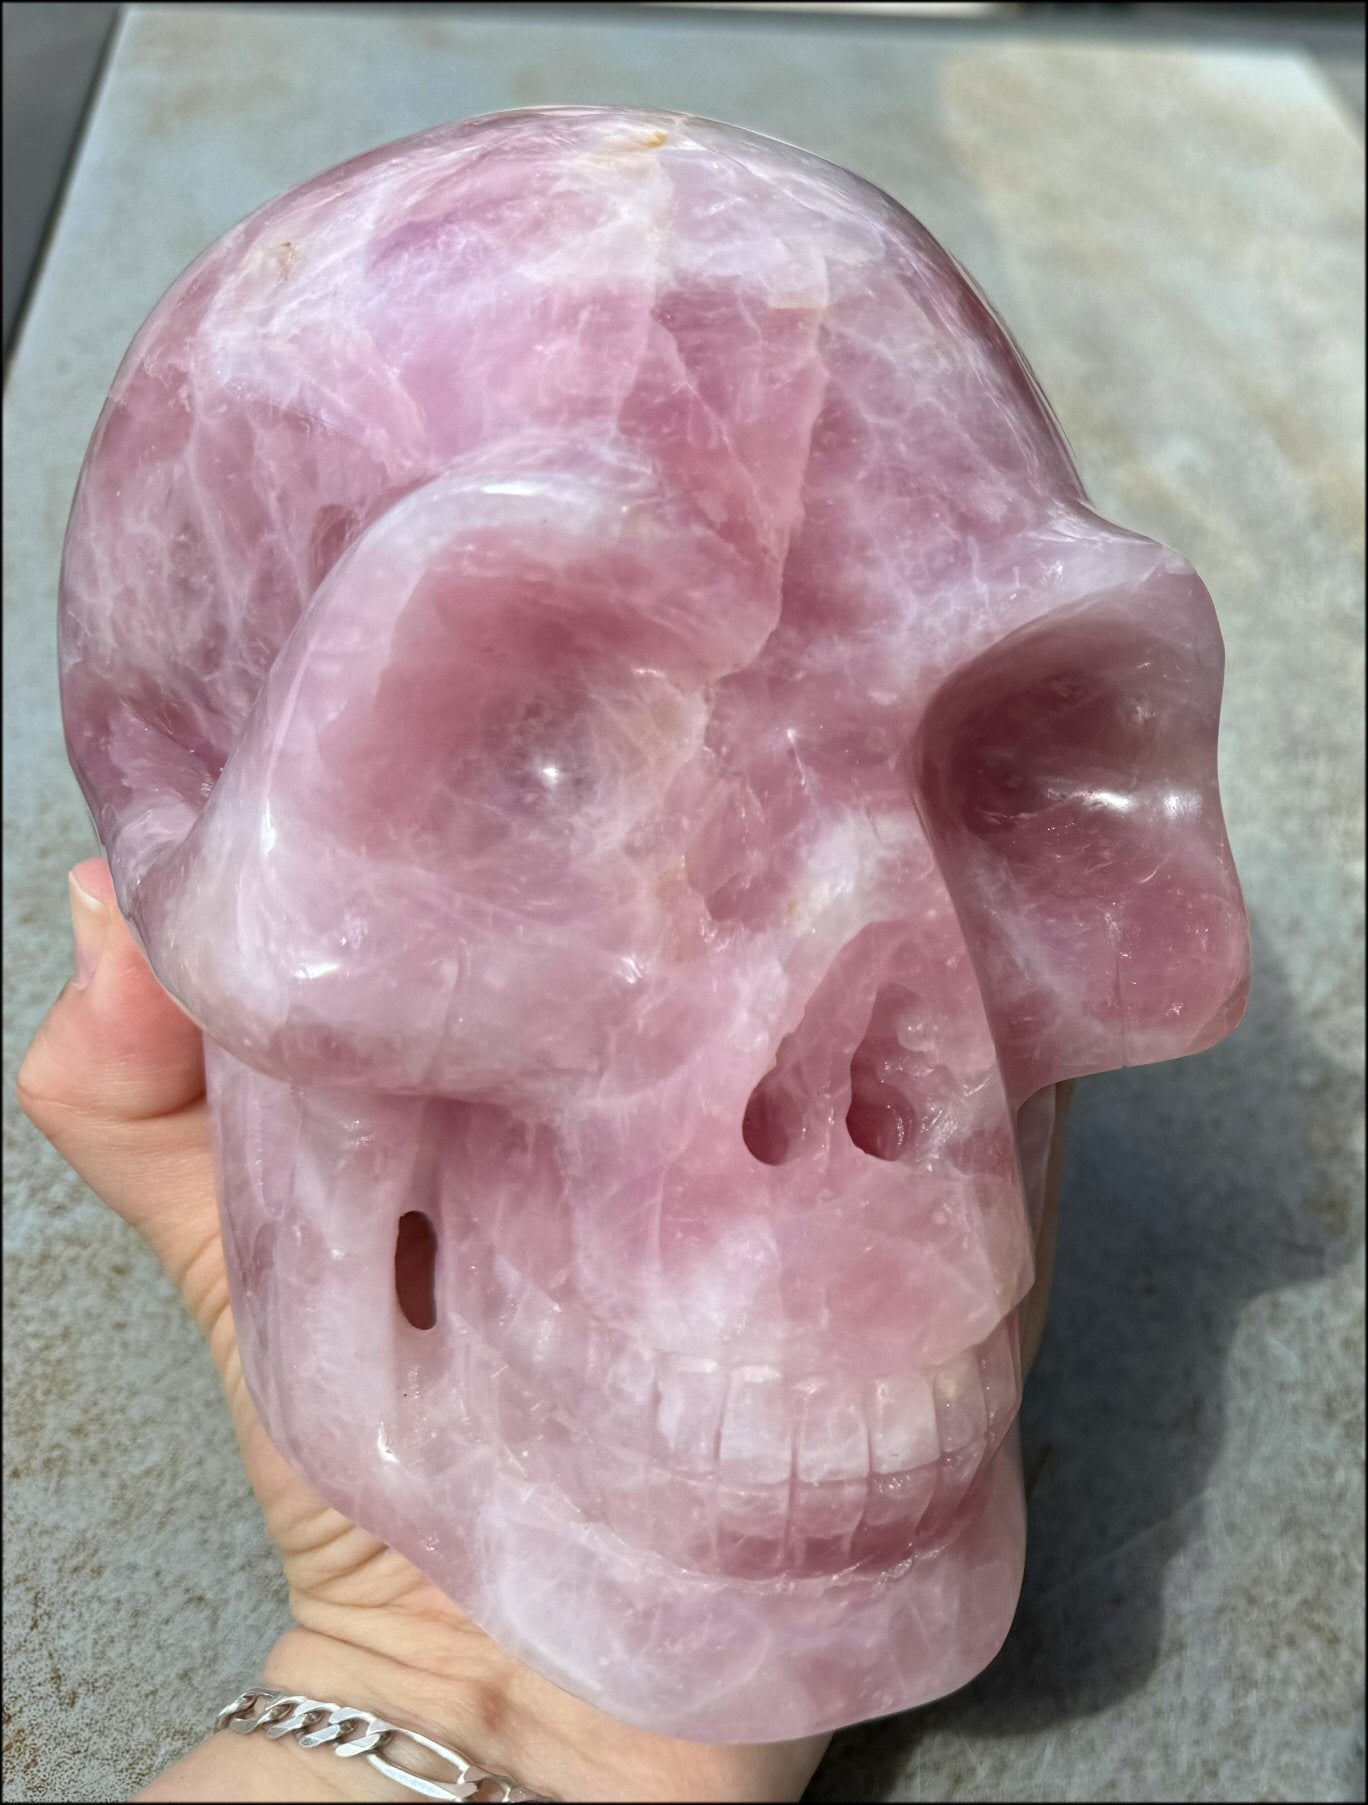 ~Super Sale~ LifeSize Brazilian ROSE QUARTZ Crystal Skull with Hematite inclusions